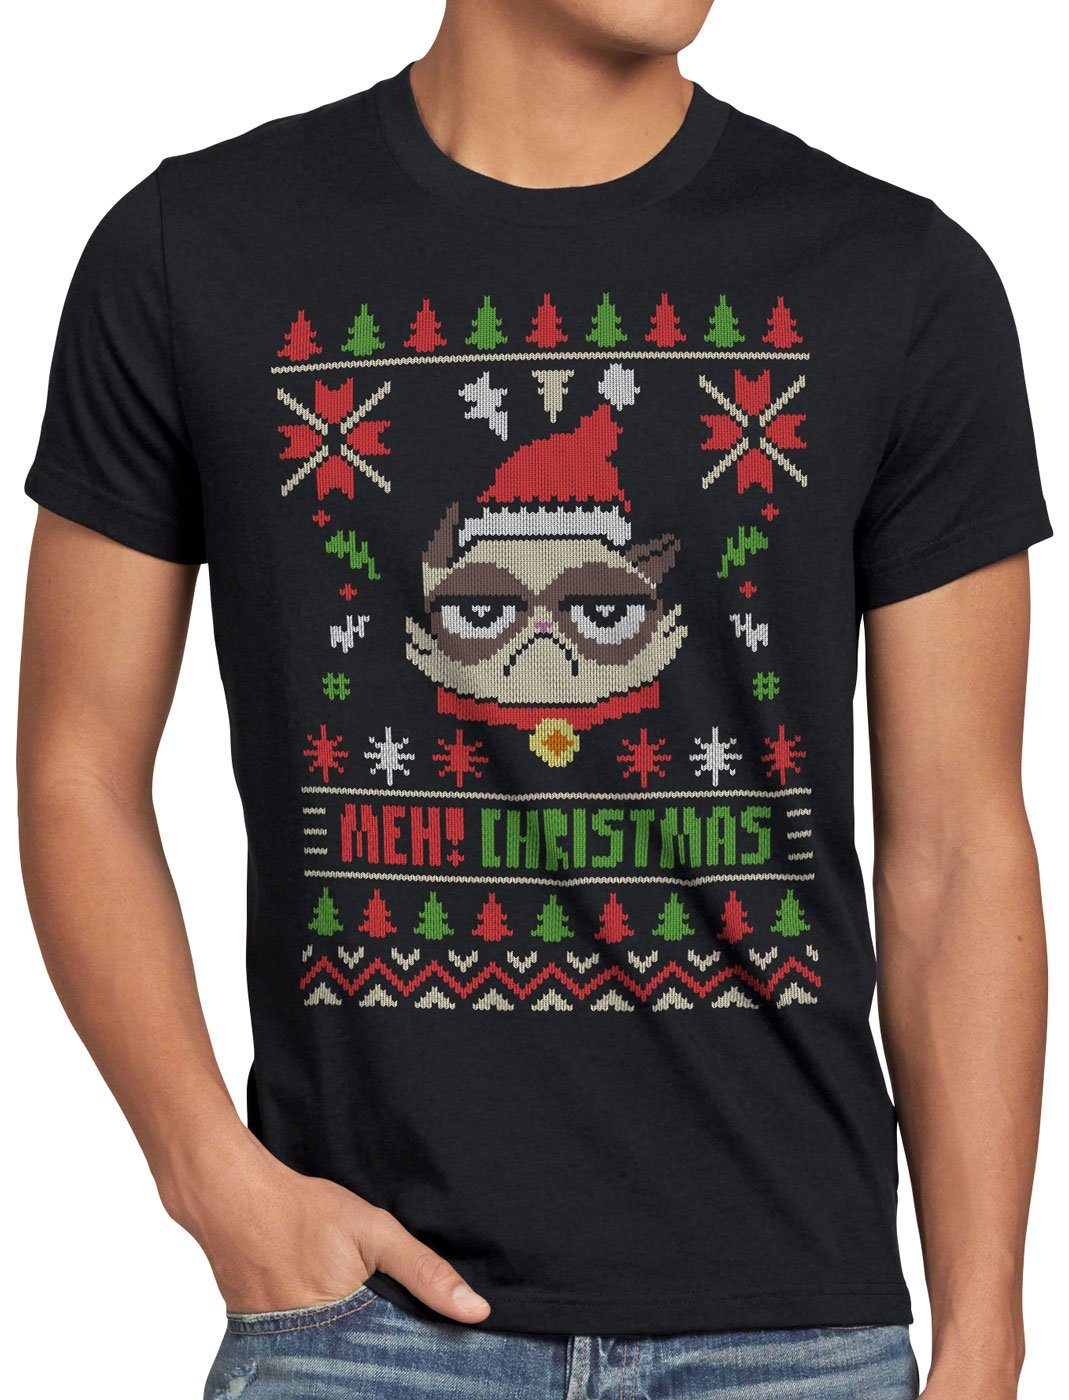 Print-Shirt style3 Jumper weihnachtsbaum Meh Christmas x-mas samtpfote Herren pulli T-Shirt kater